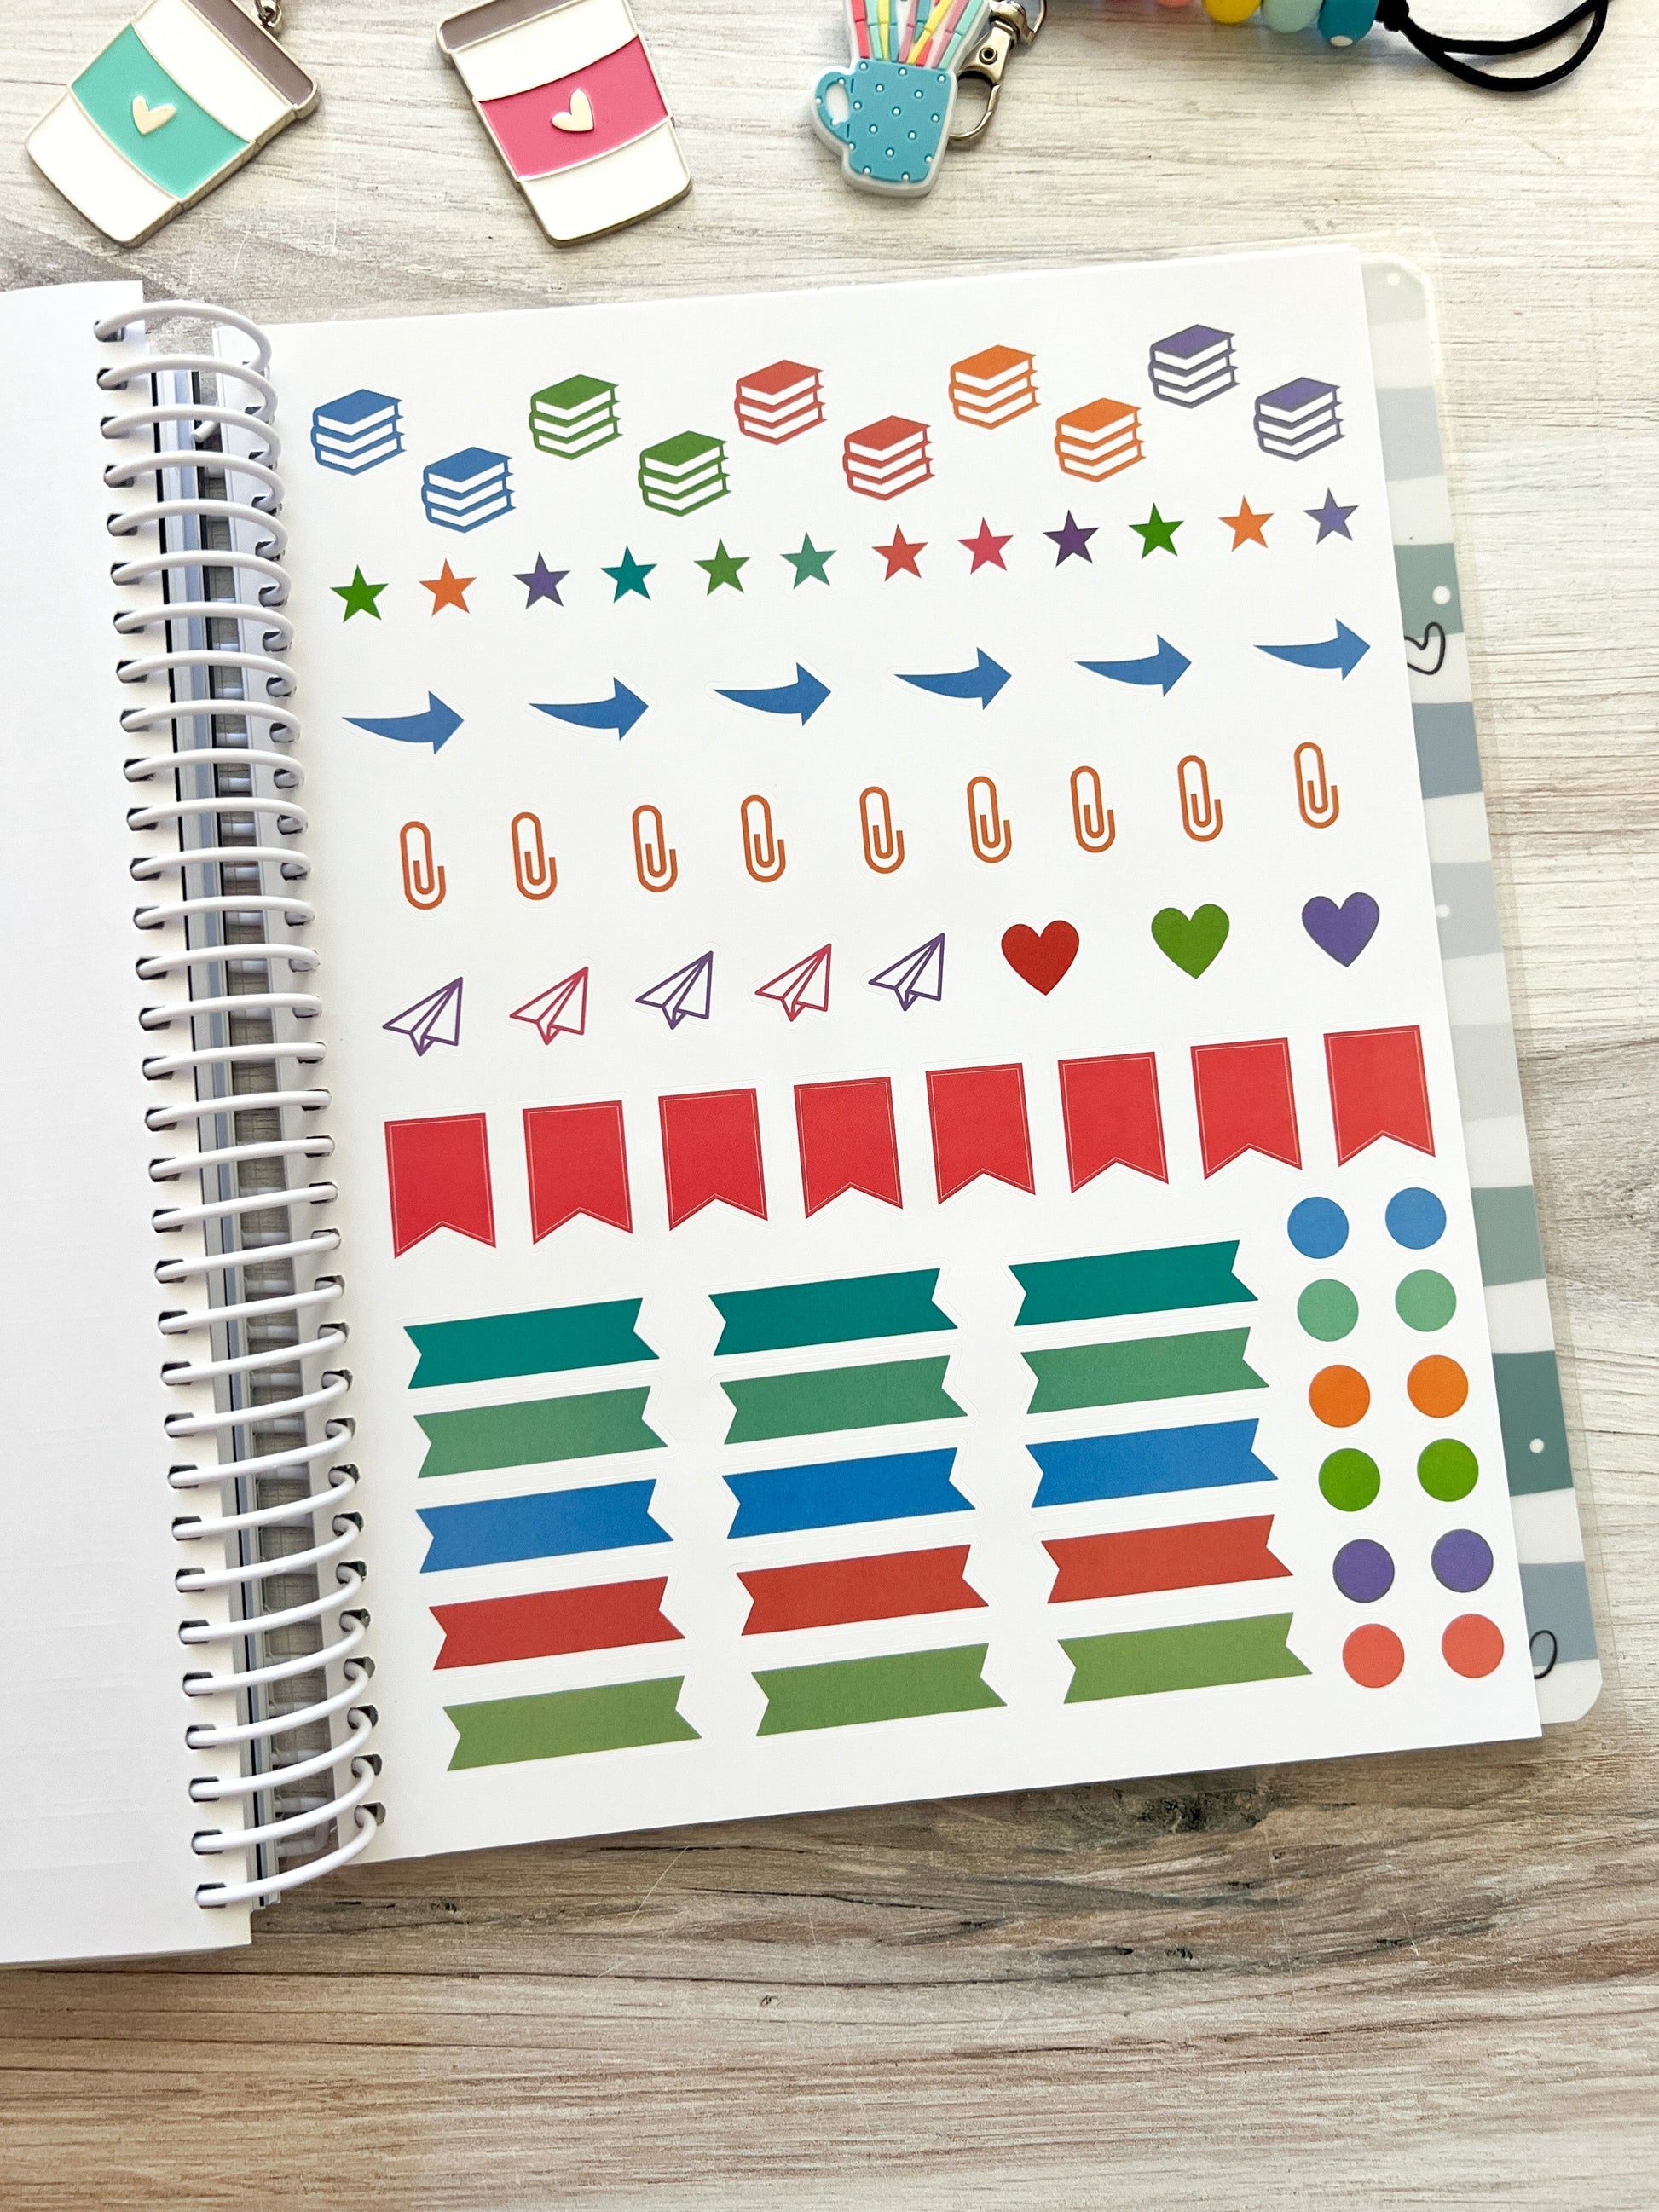 Bullet Journal Pens and Planner Pens Fine Tip Acid Free 24 Colors Crafting,  Scrapbooking, Teacher Planner, Student Planner Accessories 